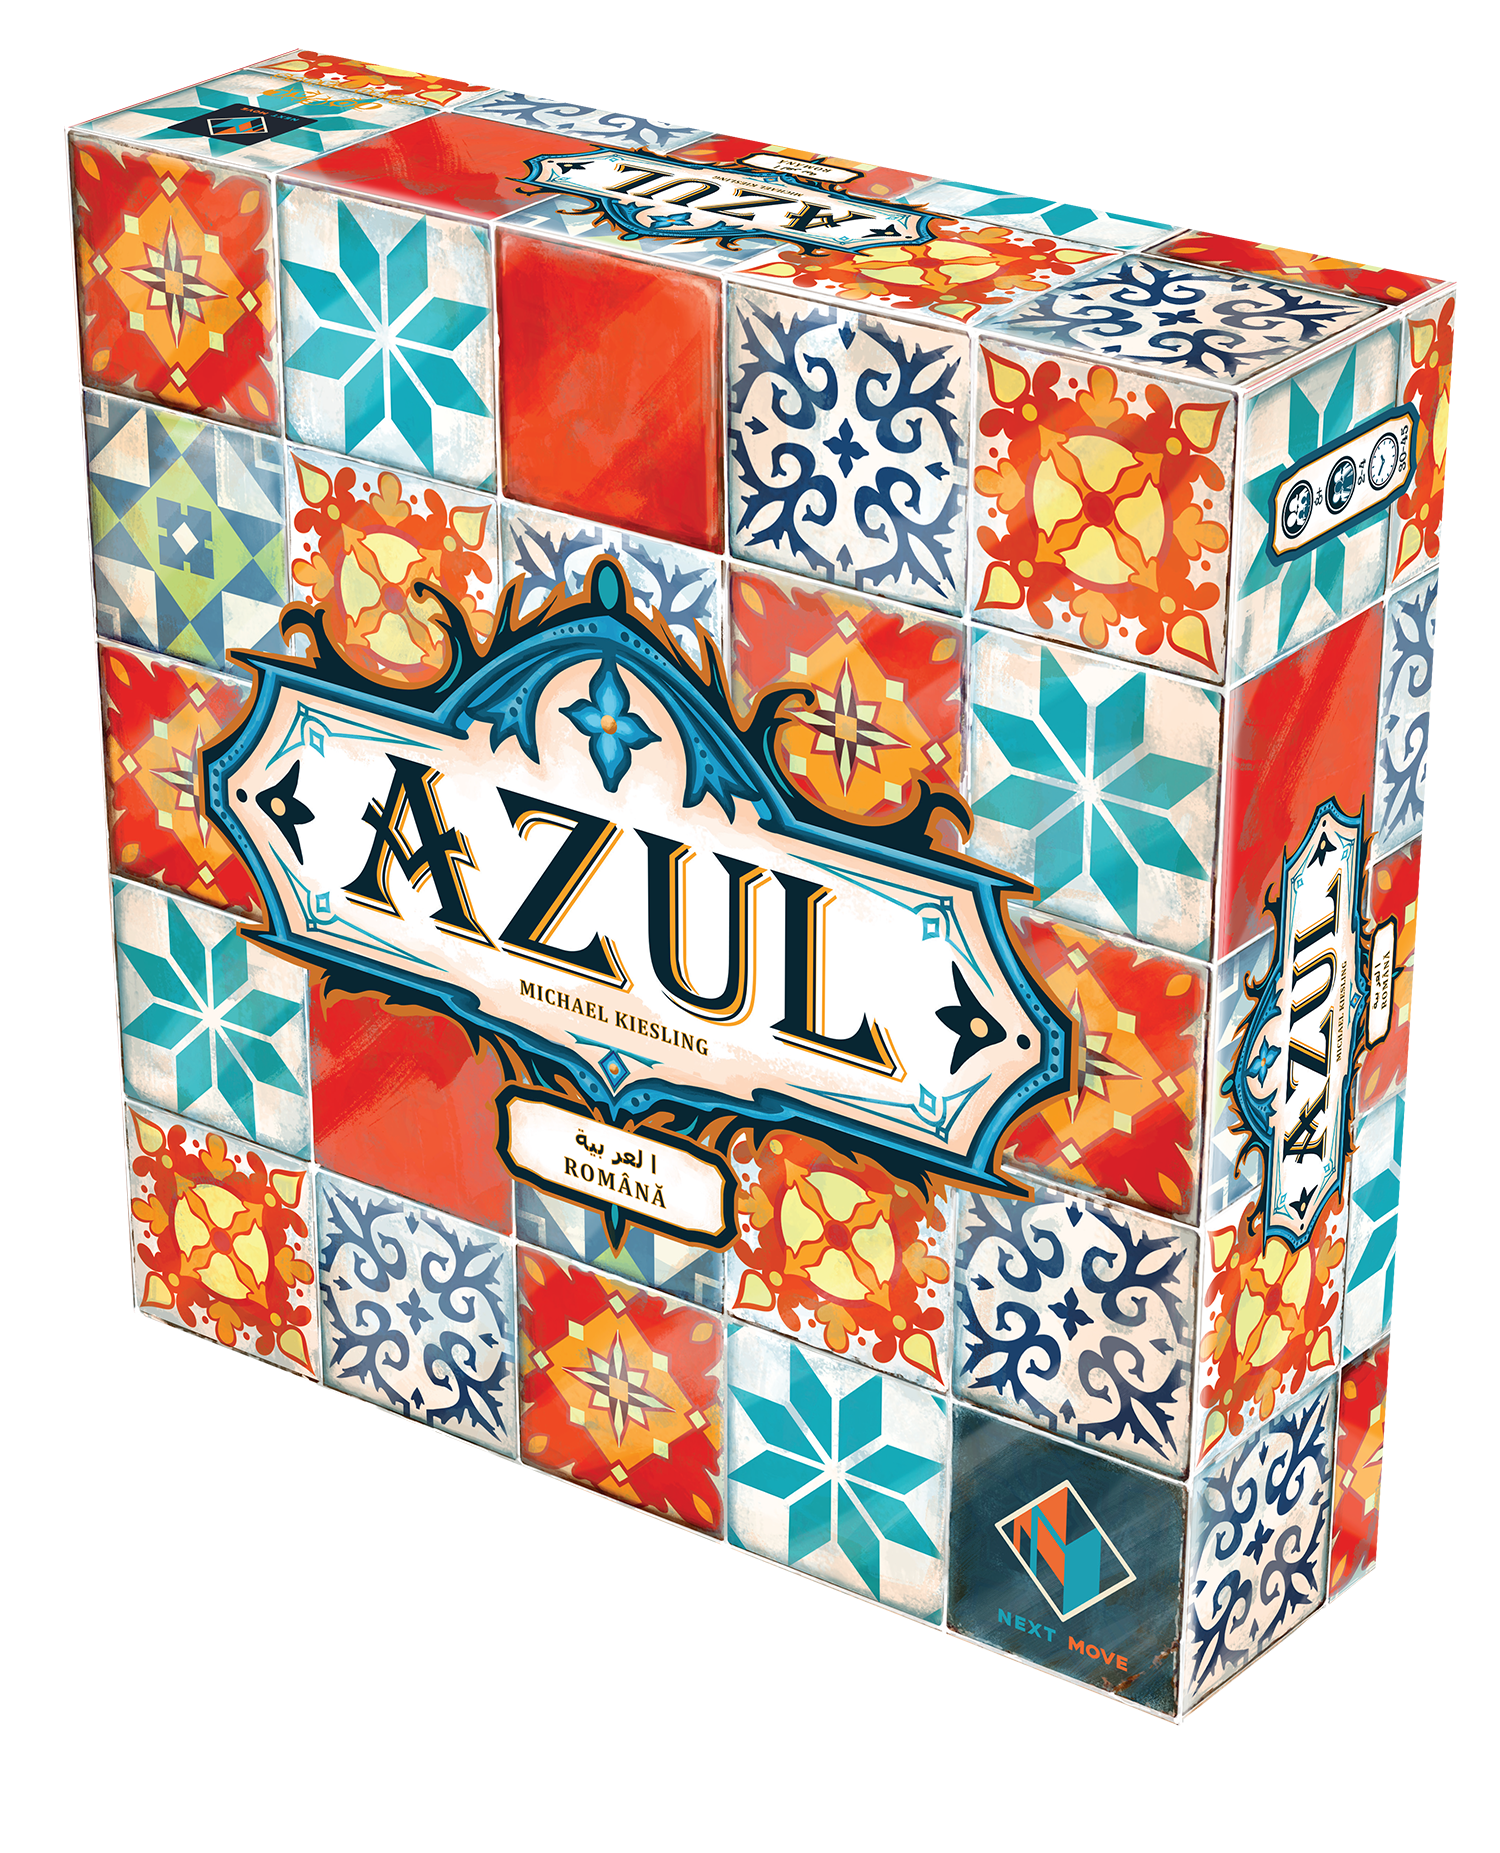 Azul (2018 Romanian Edition)